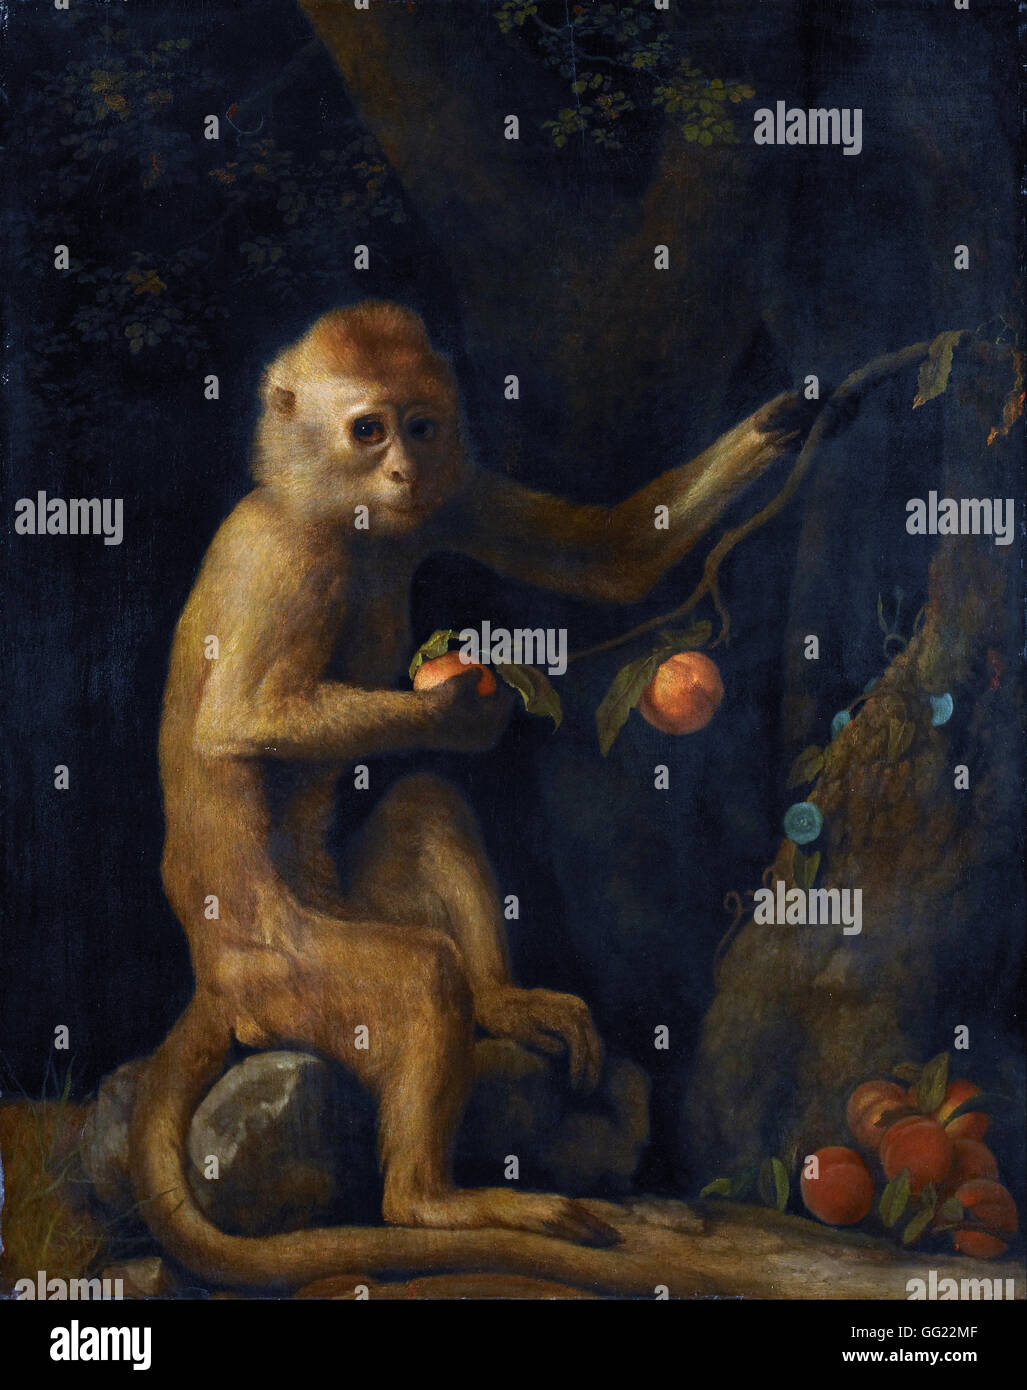 George Stubbs - A Monkey Stock Photo